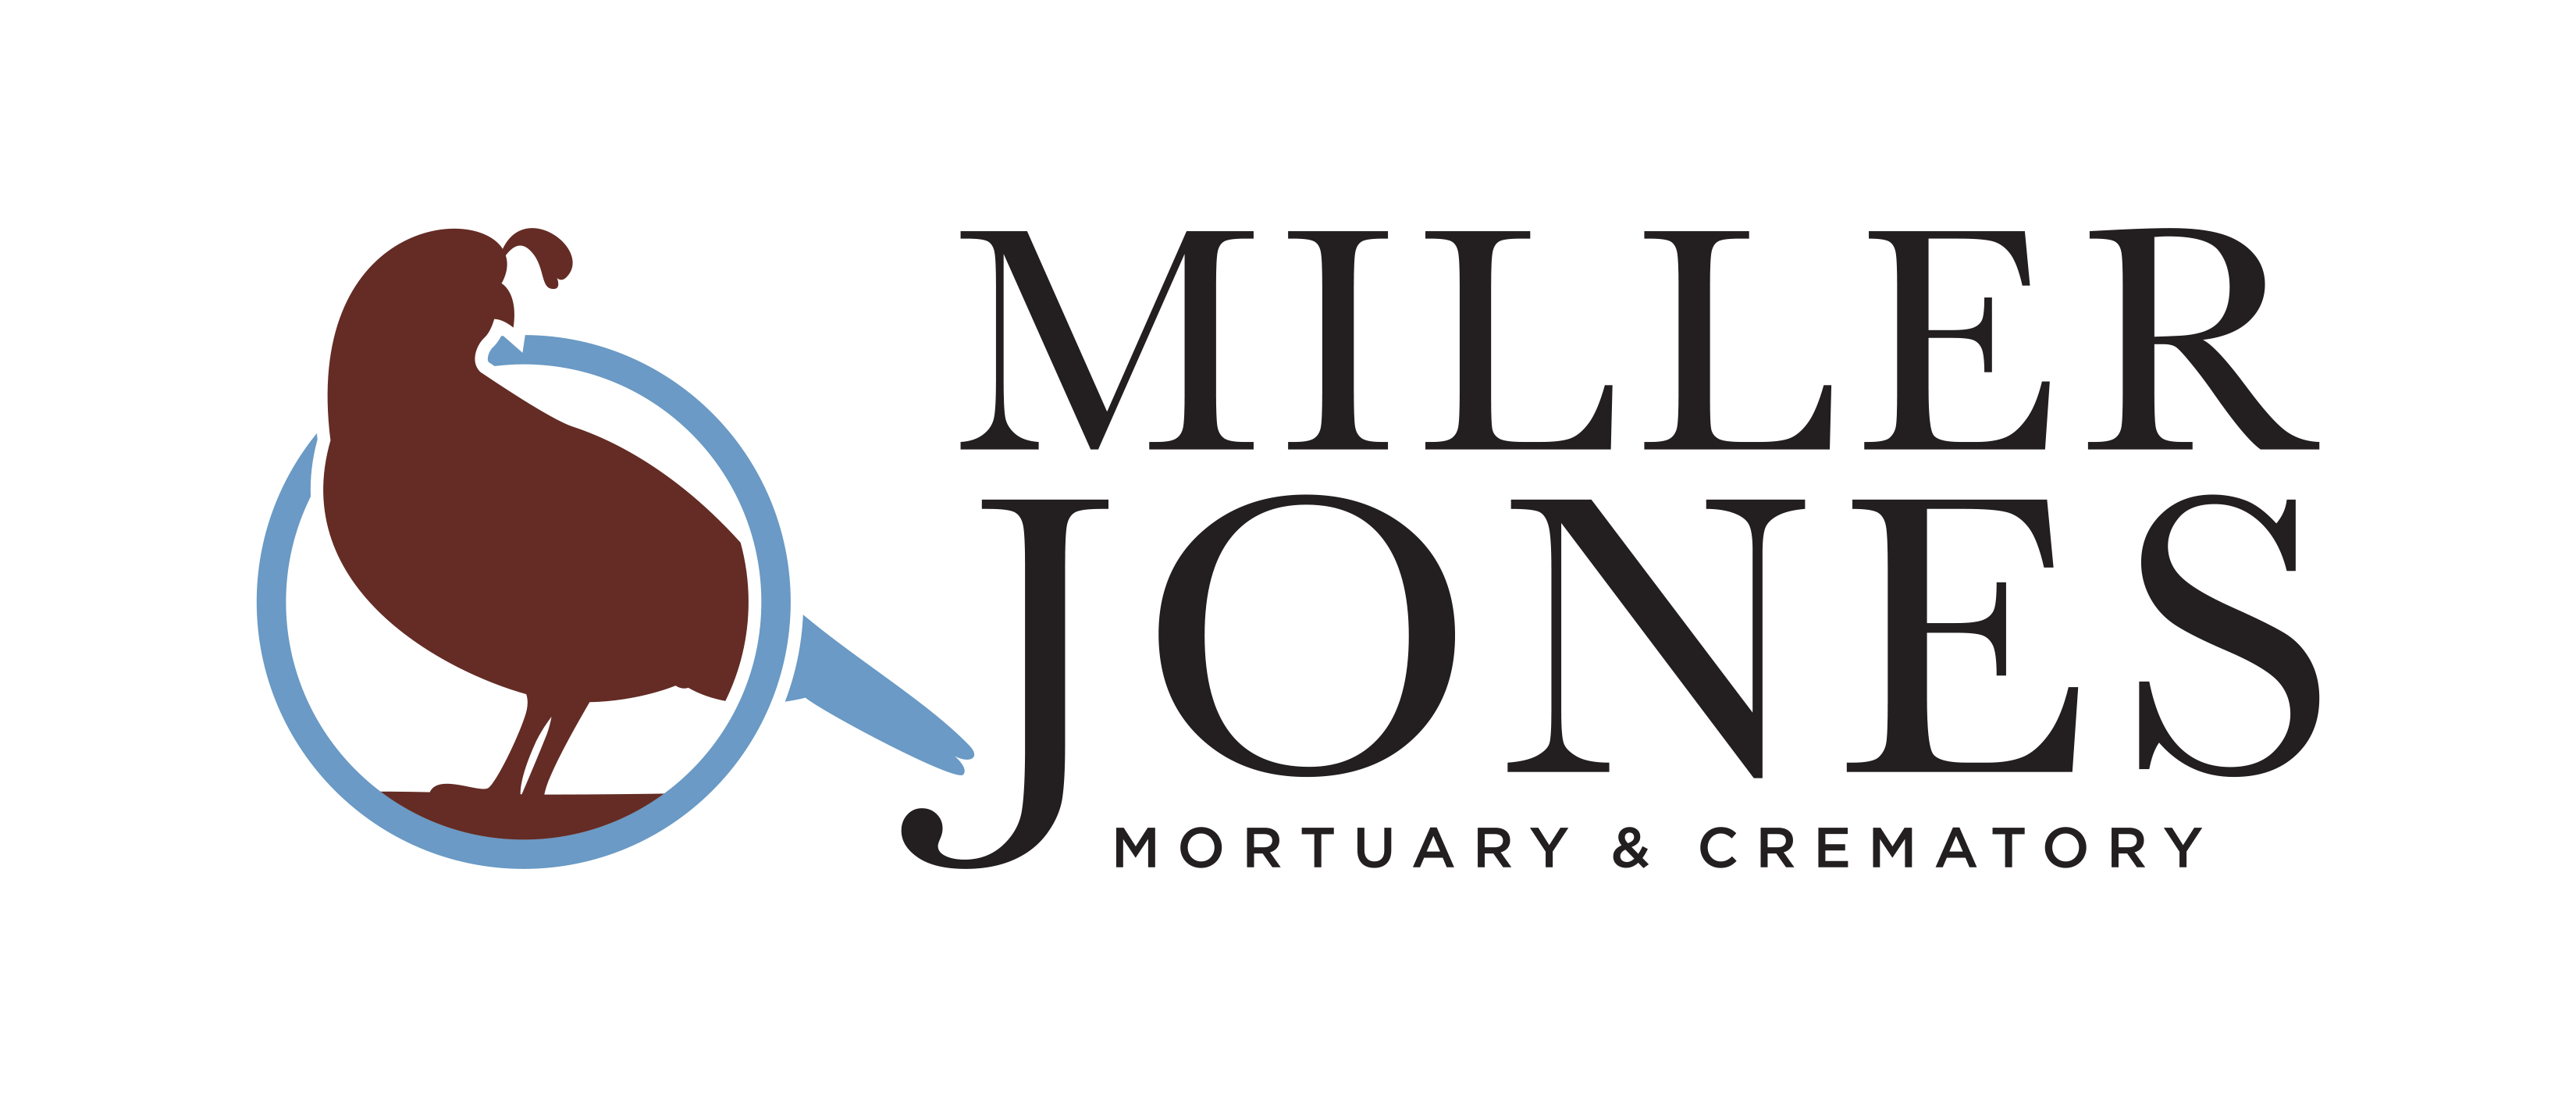 Miller-Jones Mortuary and Crematory, Inc. Company Logo